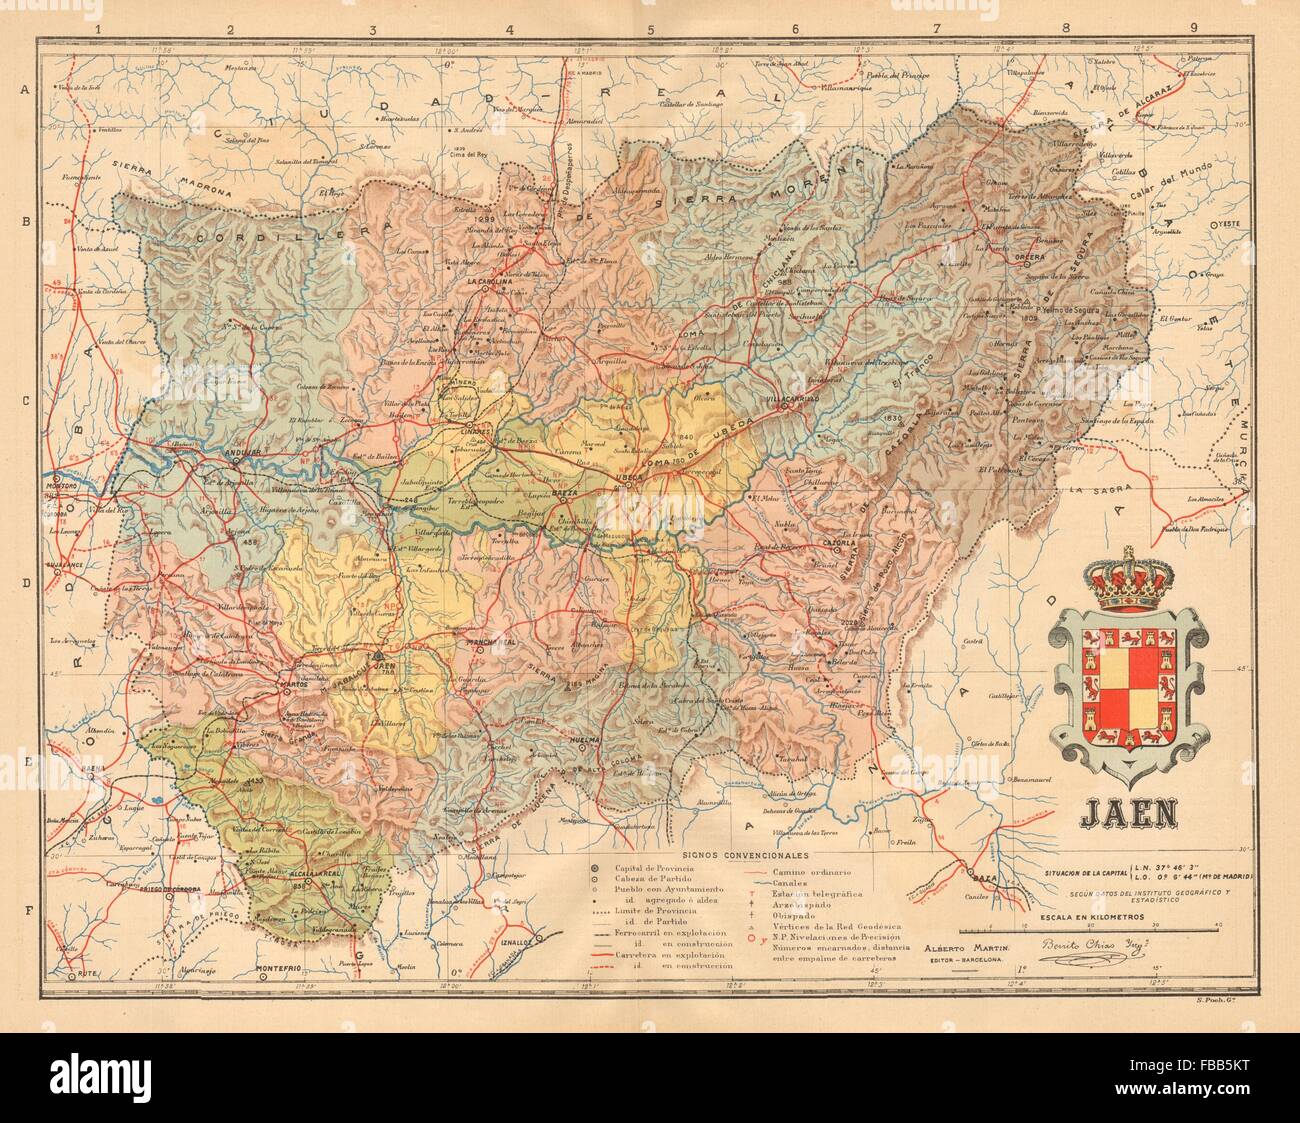 JAÉN. Jaen. Andalucia. Mapa antiguo de la provincia. ALBERTO MARTIN, c1911 Stock Photo